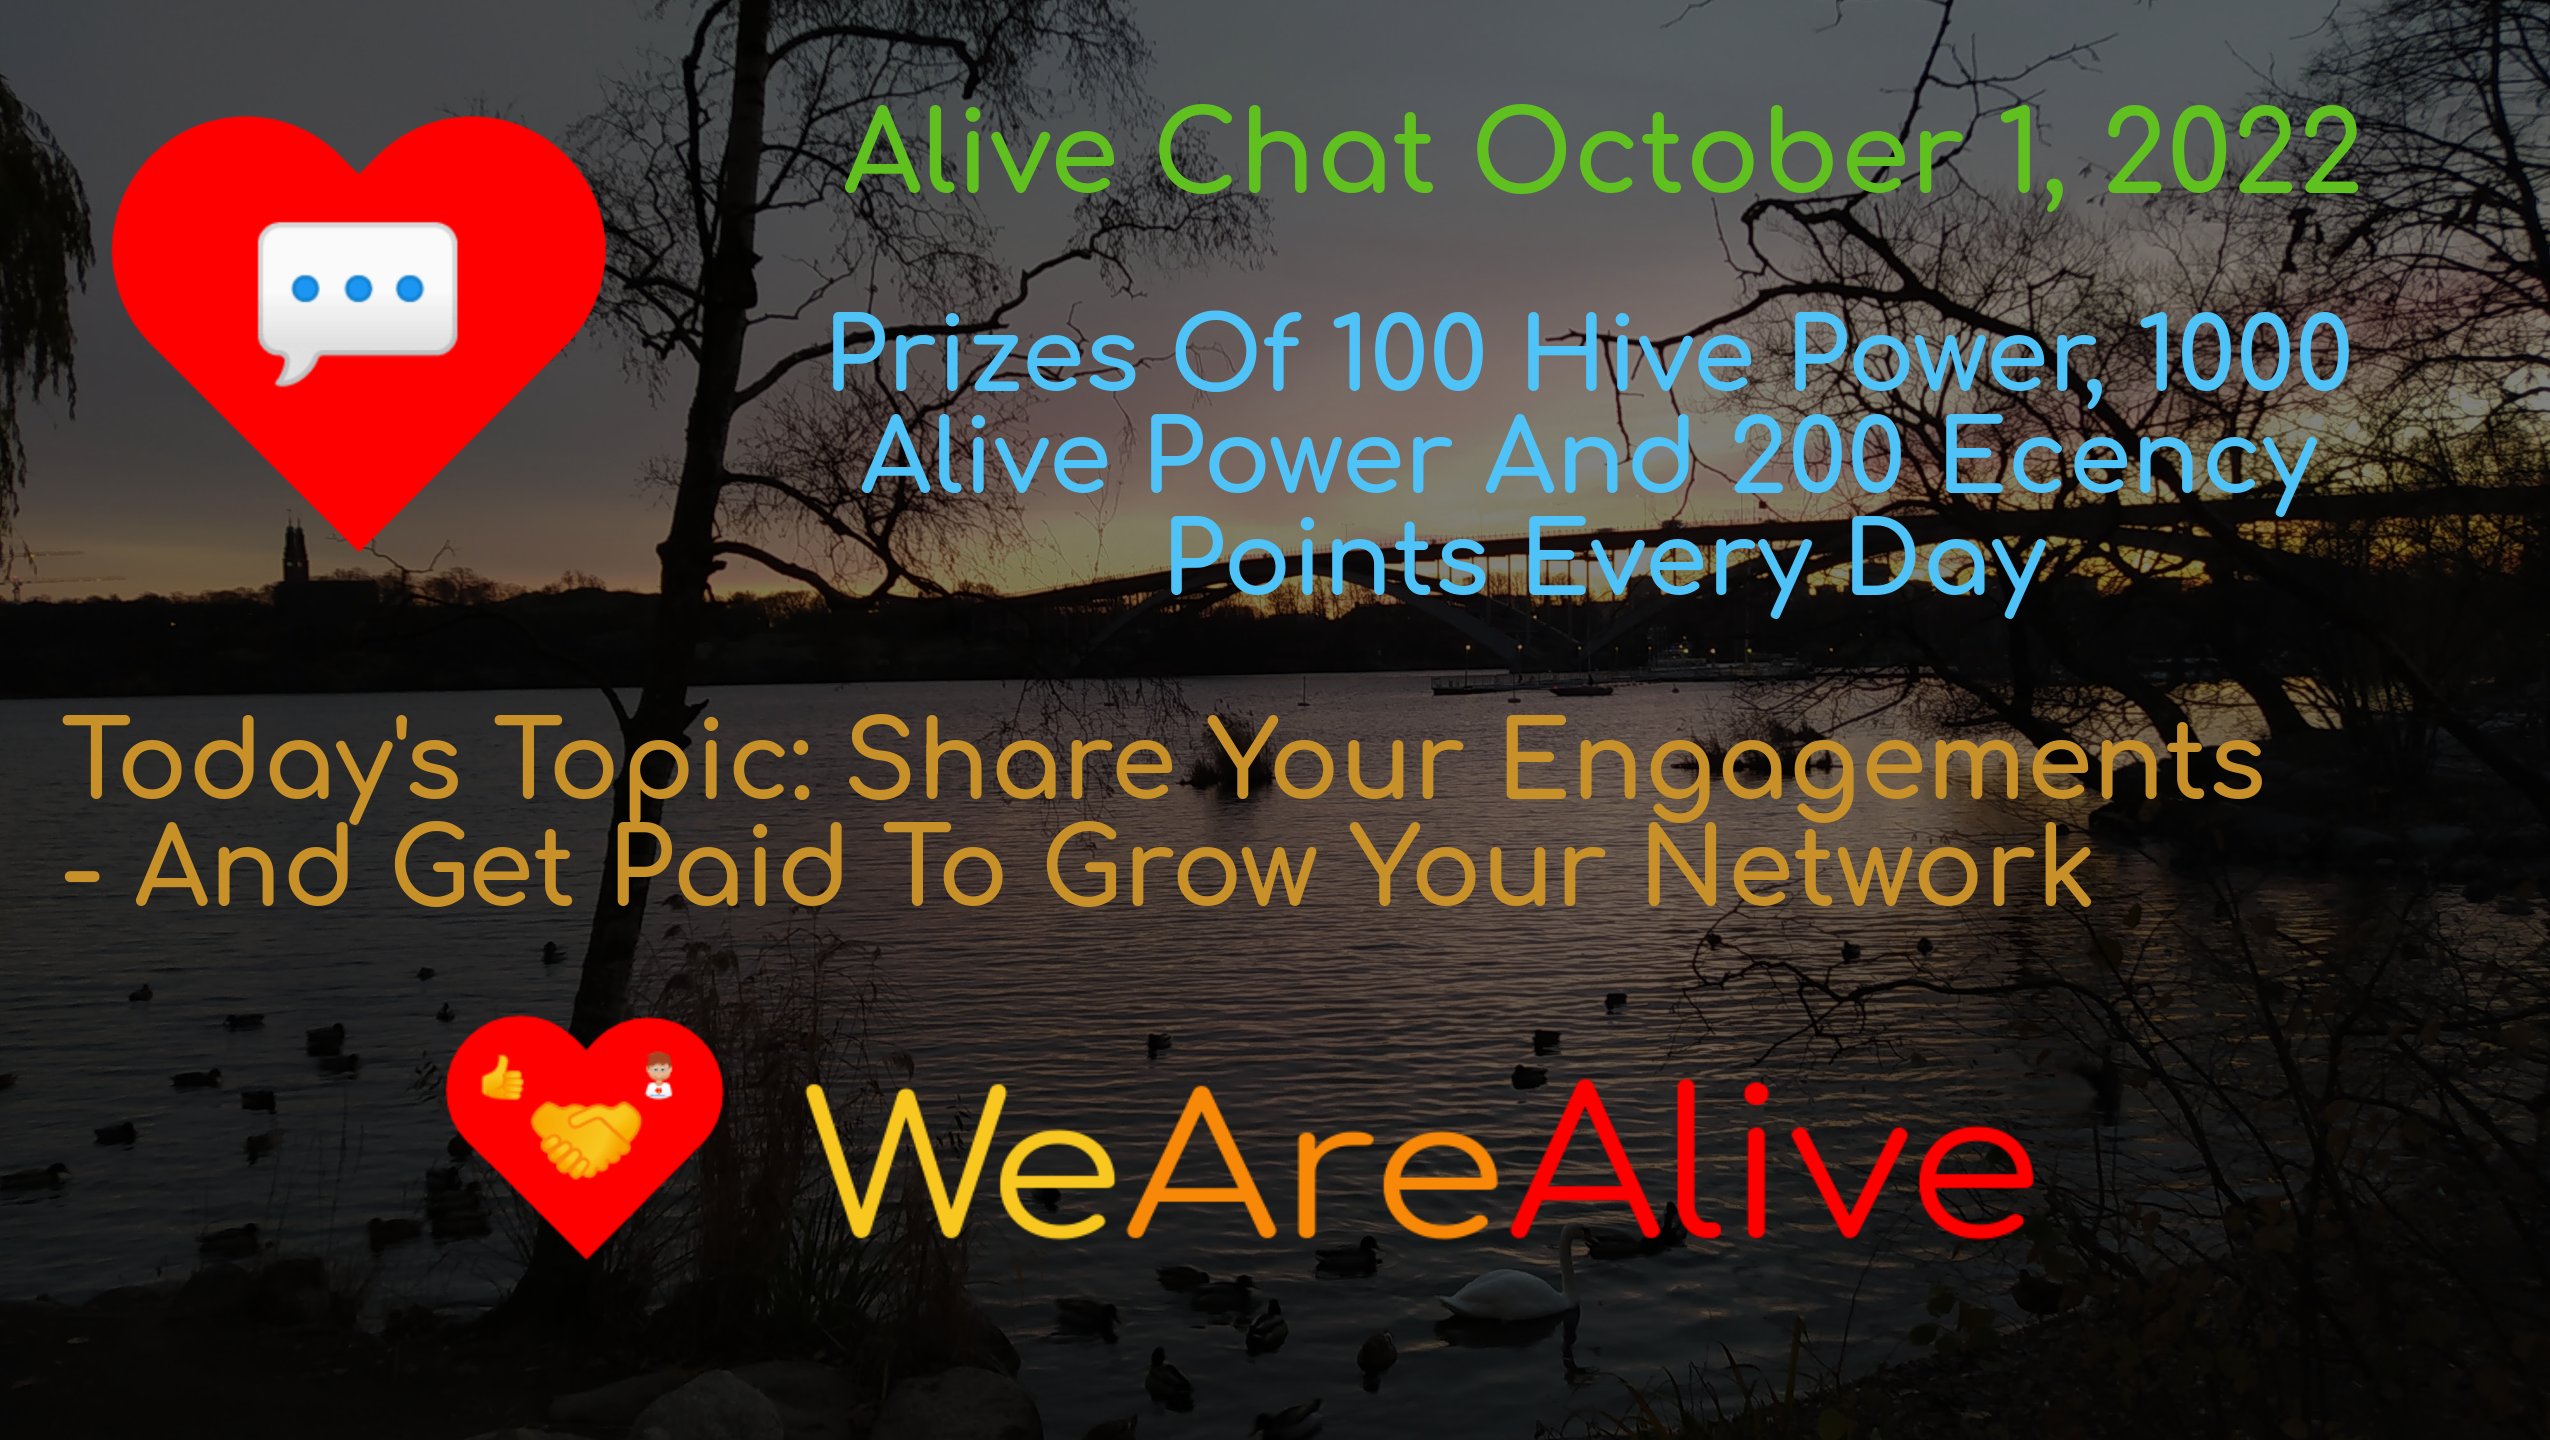 @alive.chat/alive-chat-october-1-2022